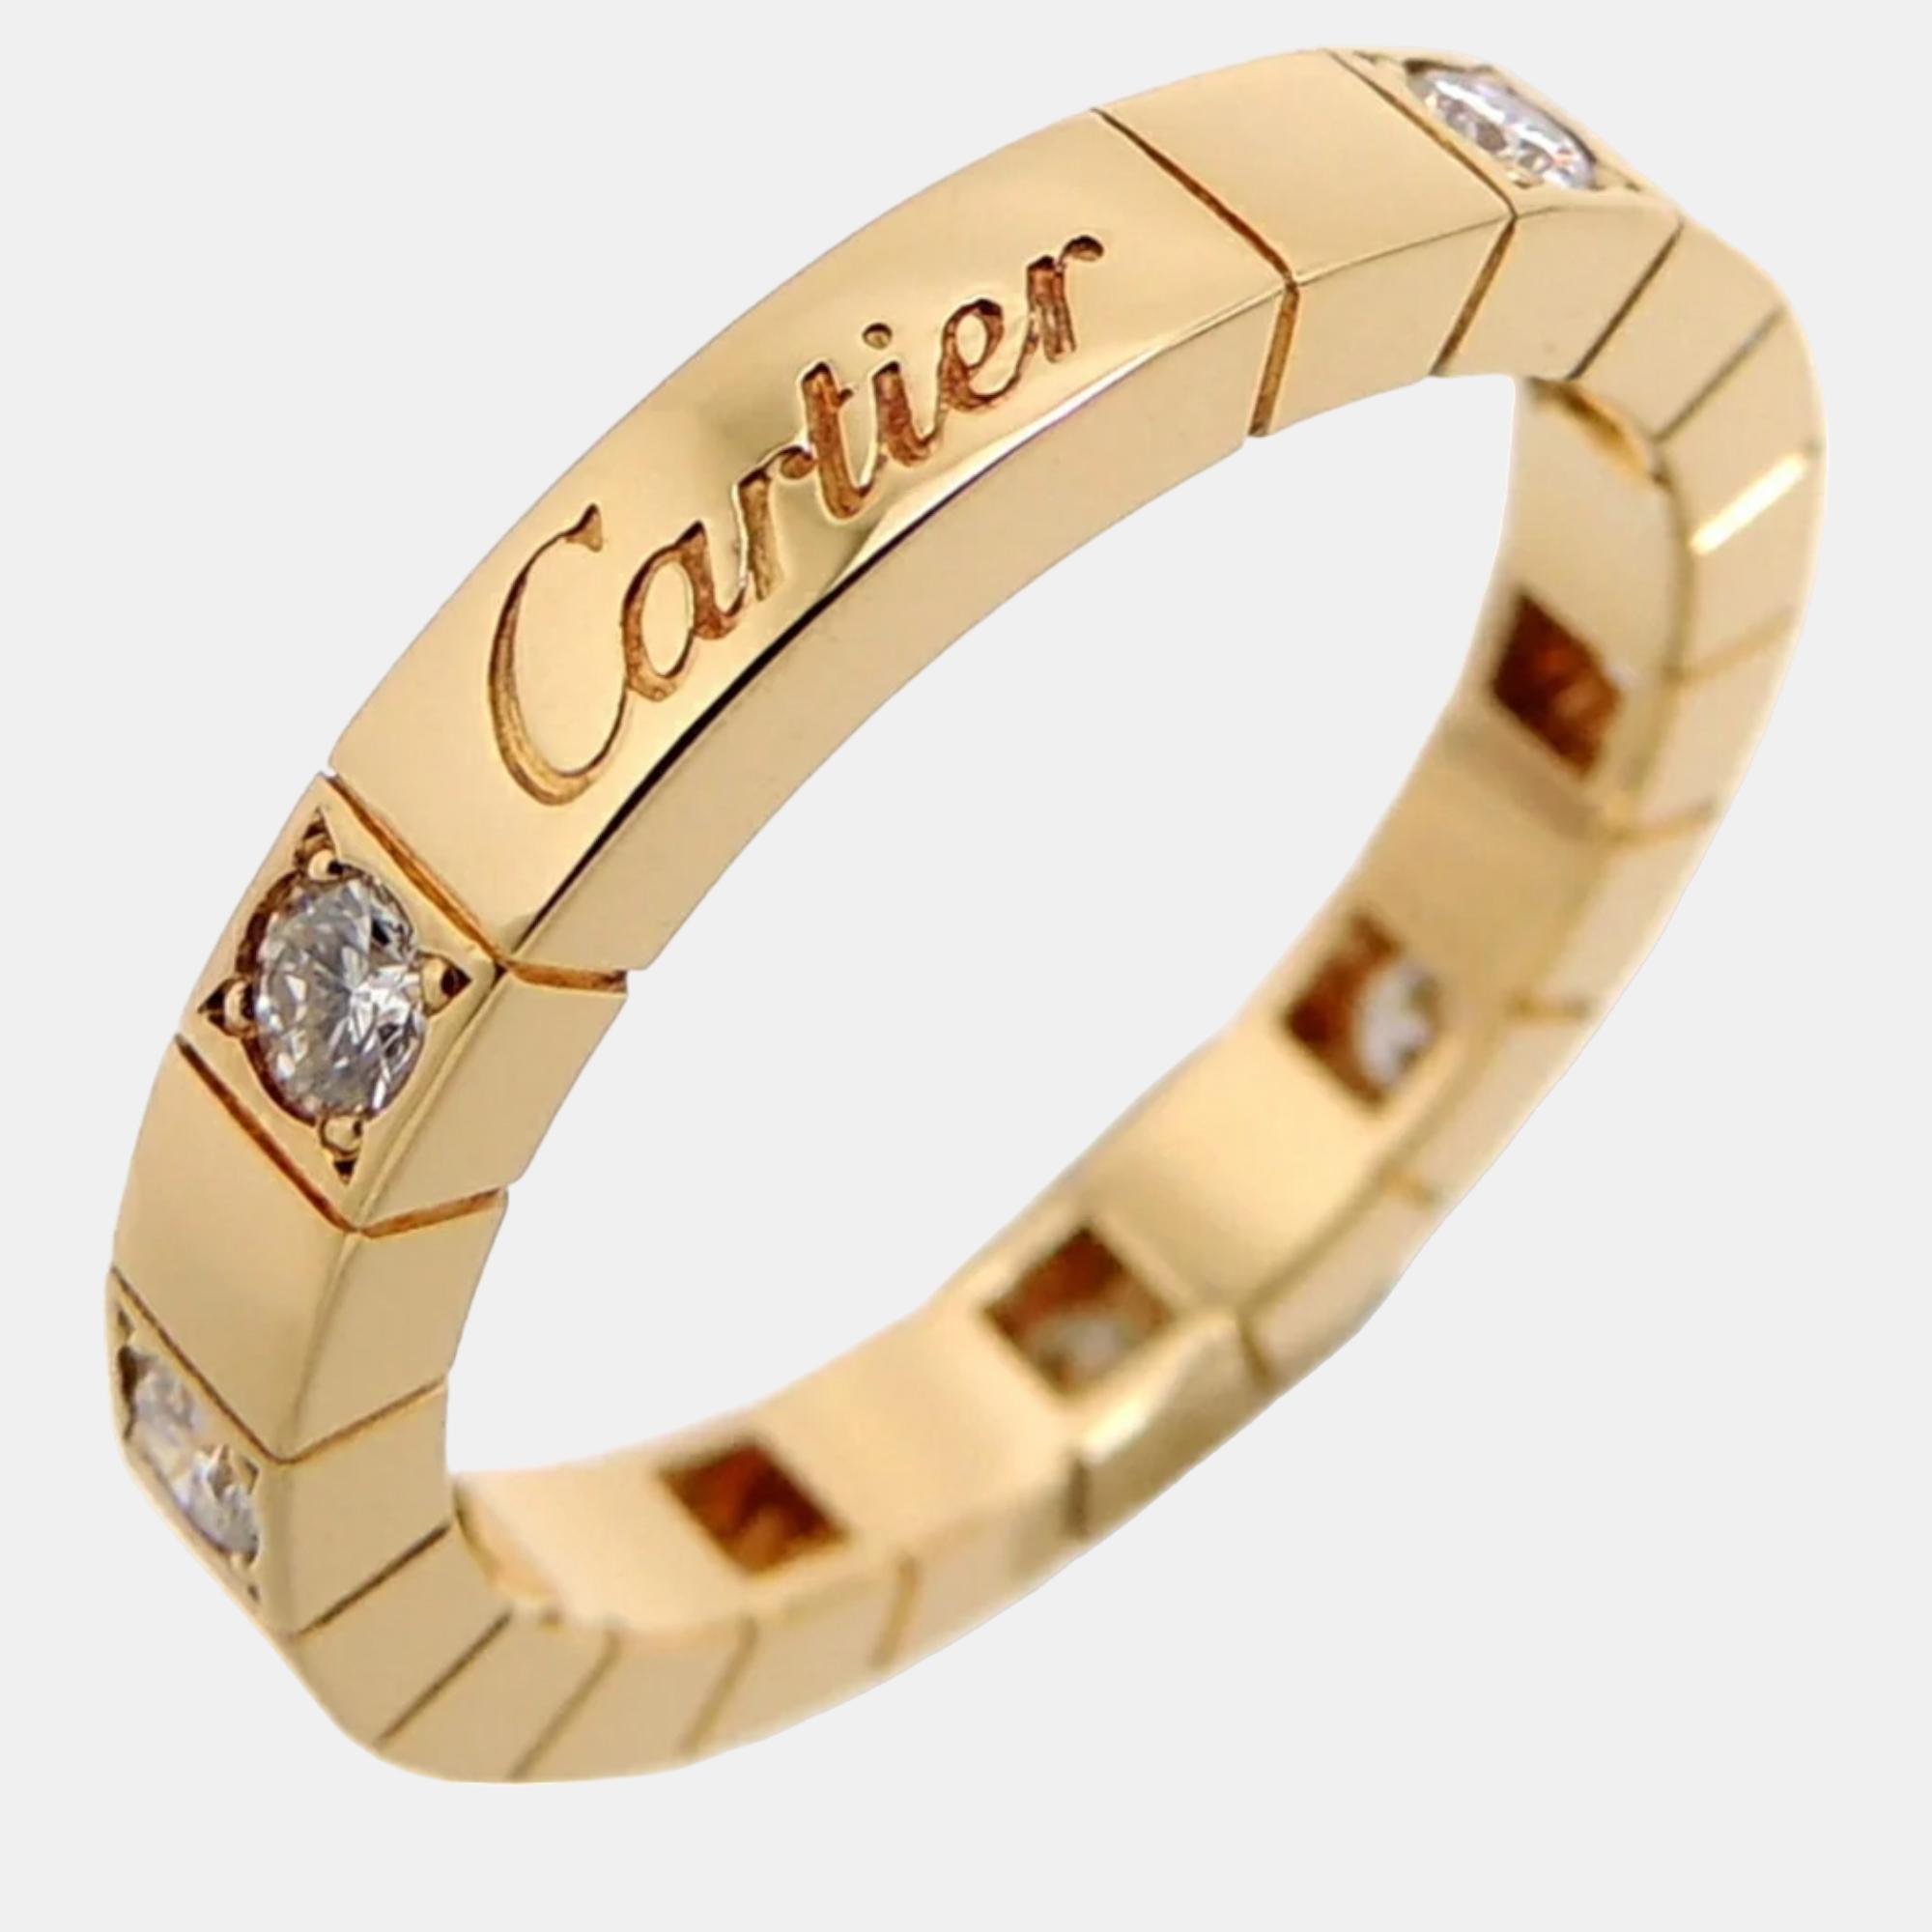 Cartier Lanieres 18K Yellow Gold Diamond Ring EU 53